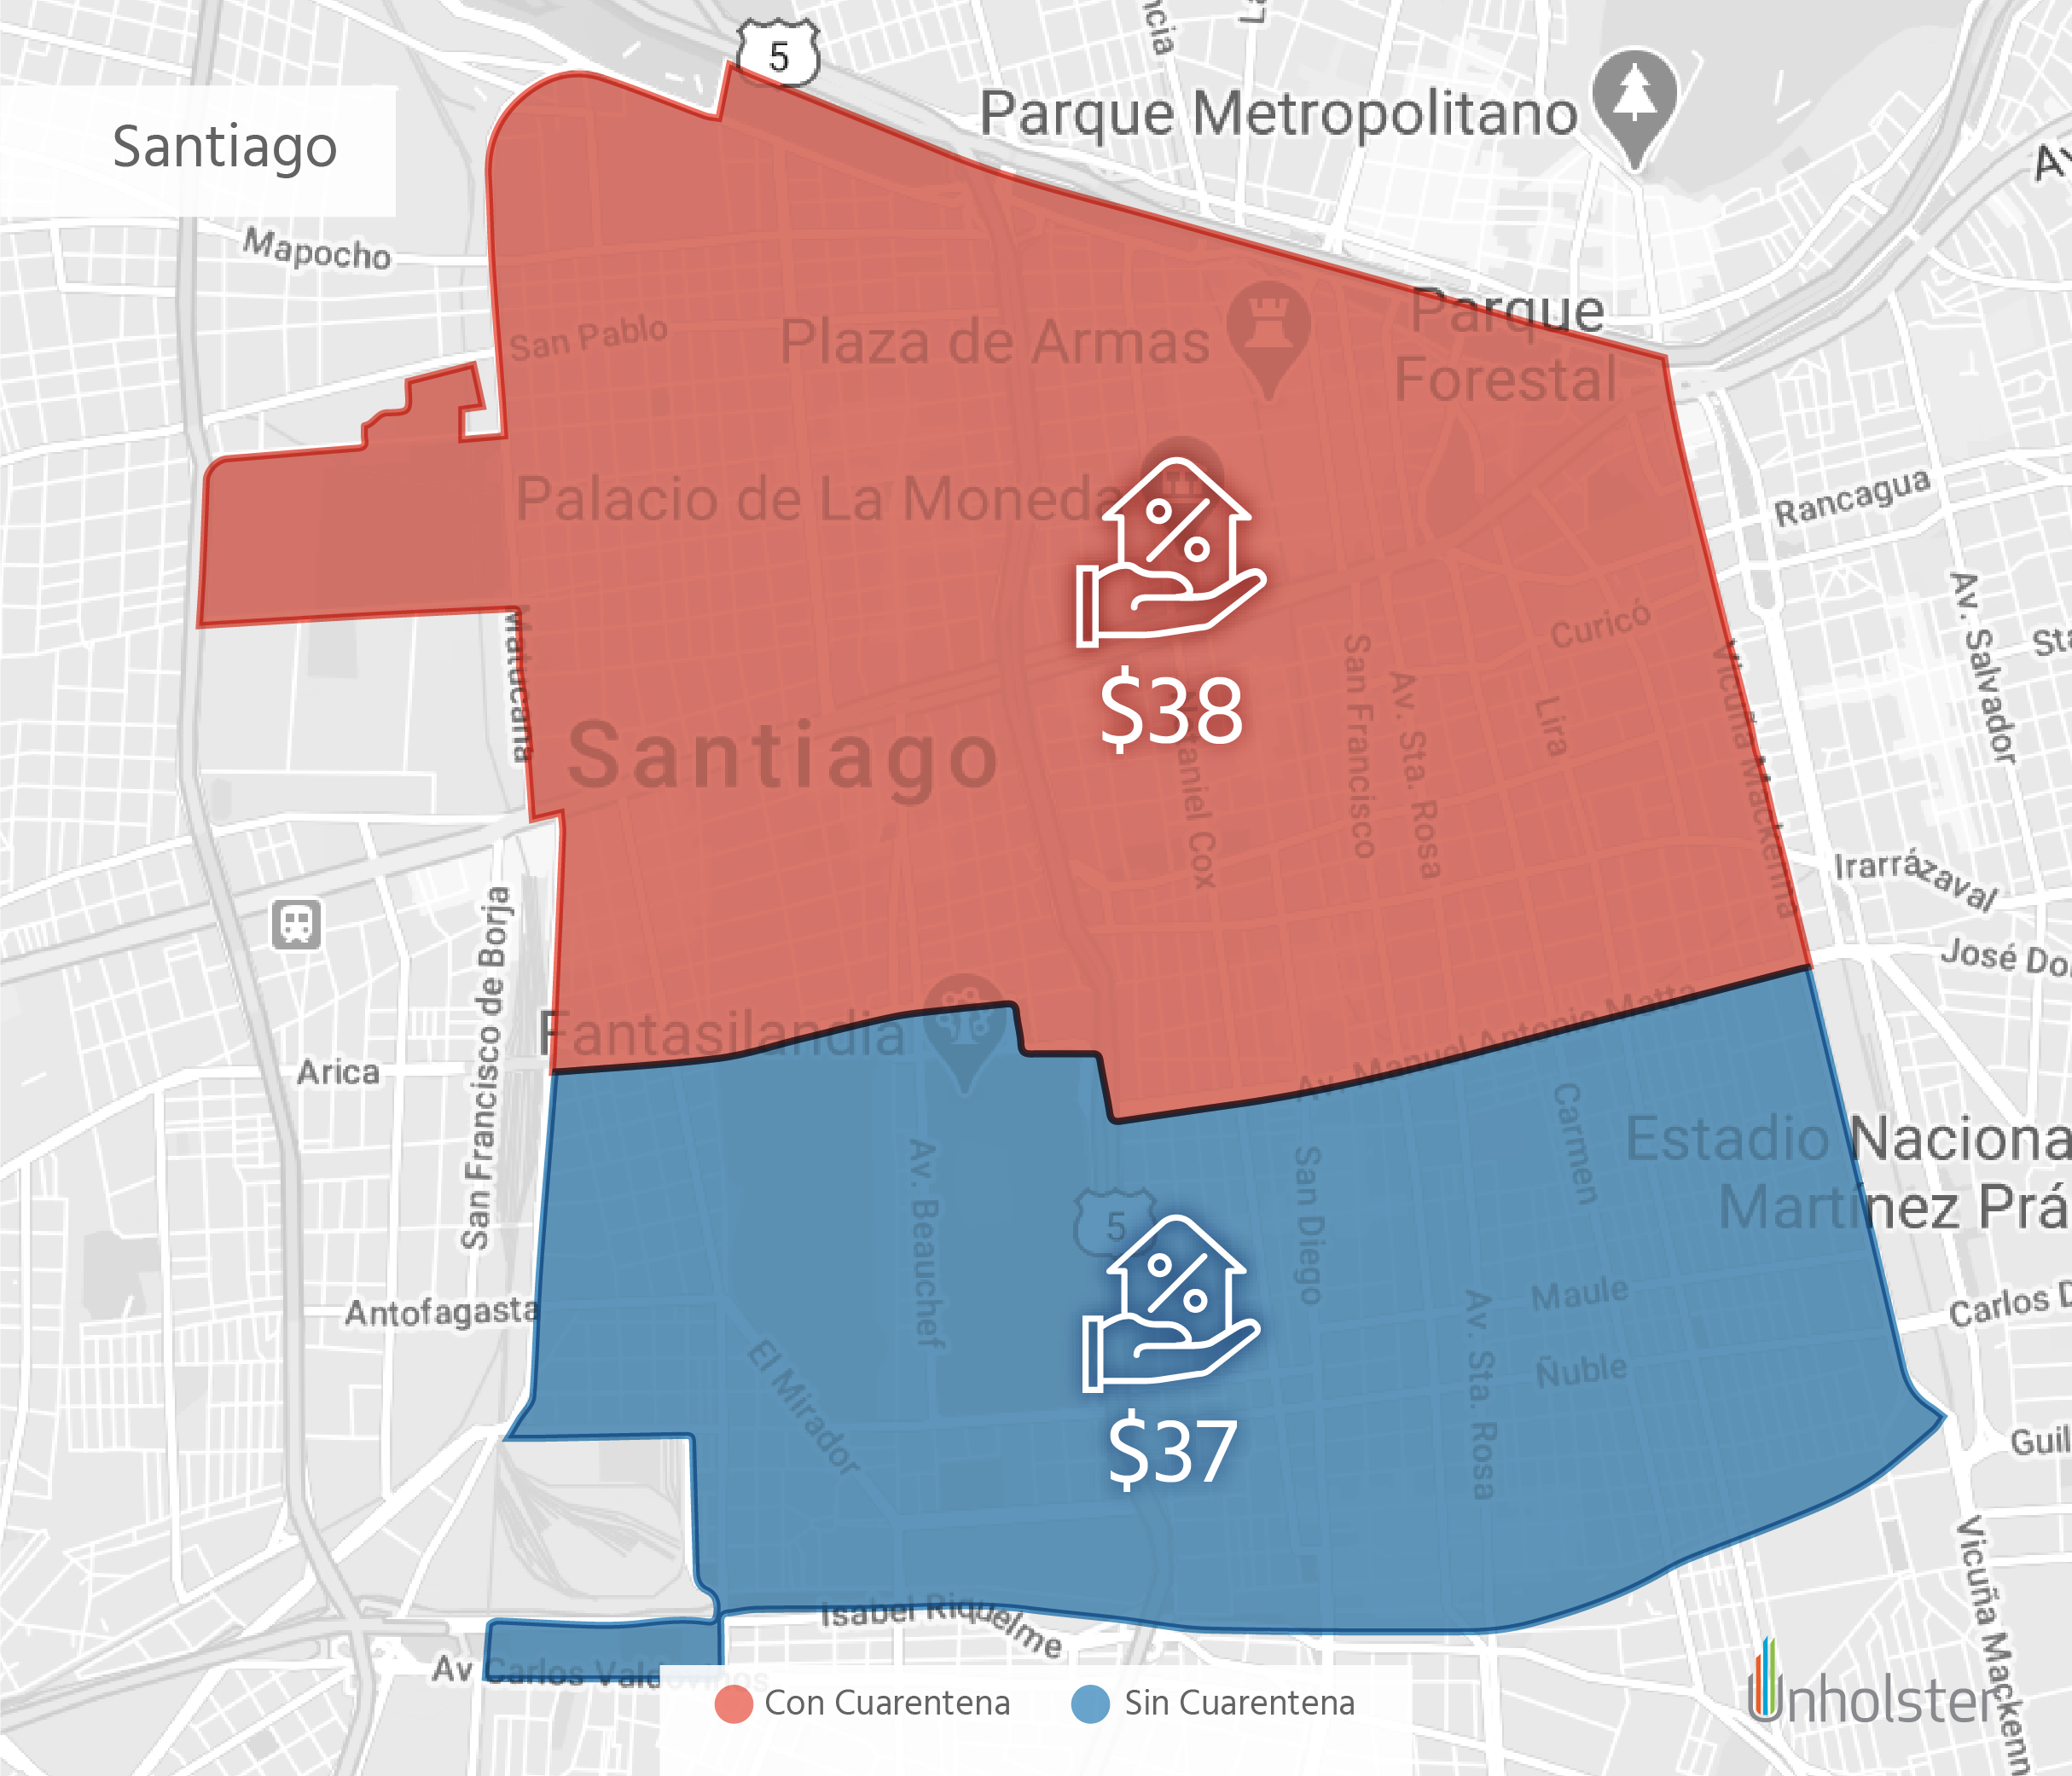 Mapa de Santiago con cuarentena parcial. Créditos: Unholster